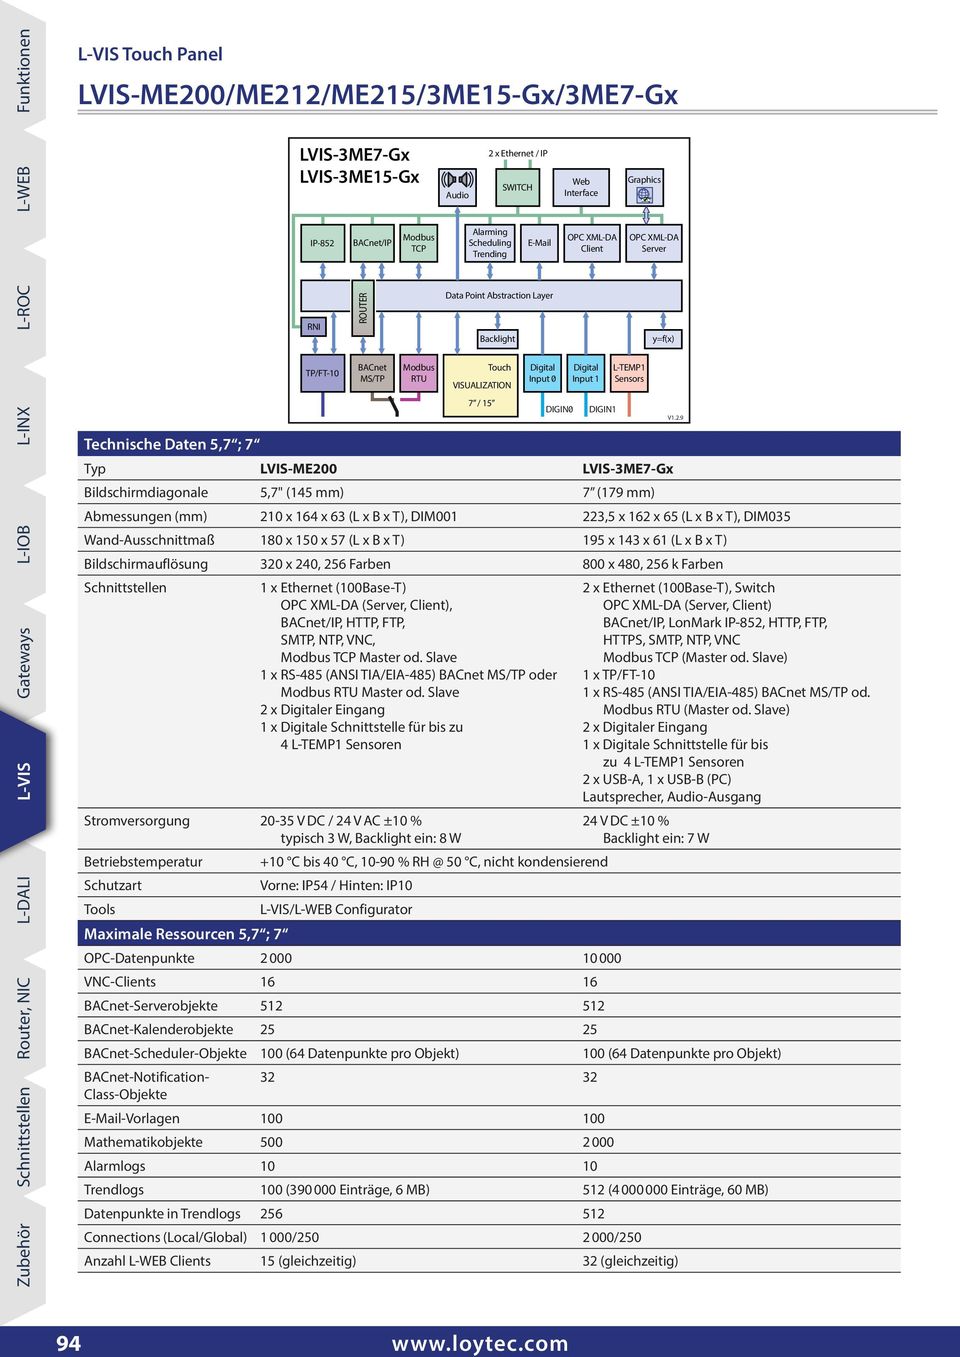 Farben 1 x Ethernet (100Base-T) (, ), / IP, HTTP, FTP, SMTP, NTP, VNC, Master od. Slave 1 x RS 485 (ANSI TIA/EIA-485) MS/ TP oder Master od.